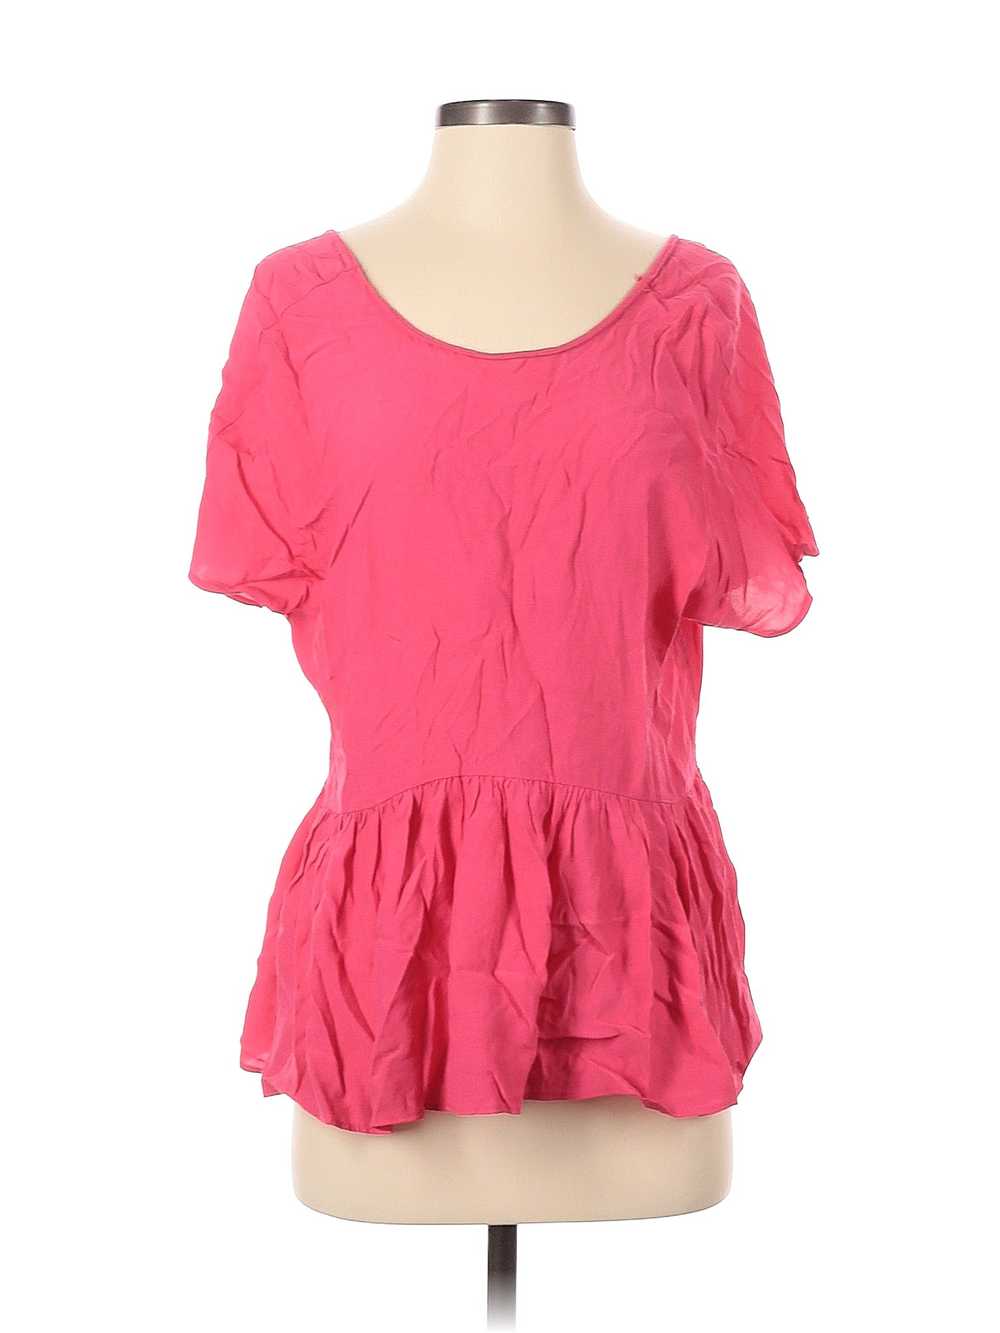 Trafaluc by Zara Women Pink Short Sleeve Blouse XS - image 1